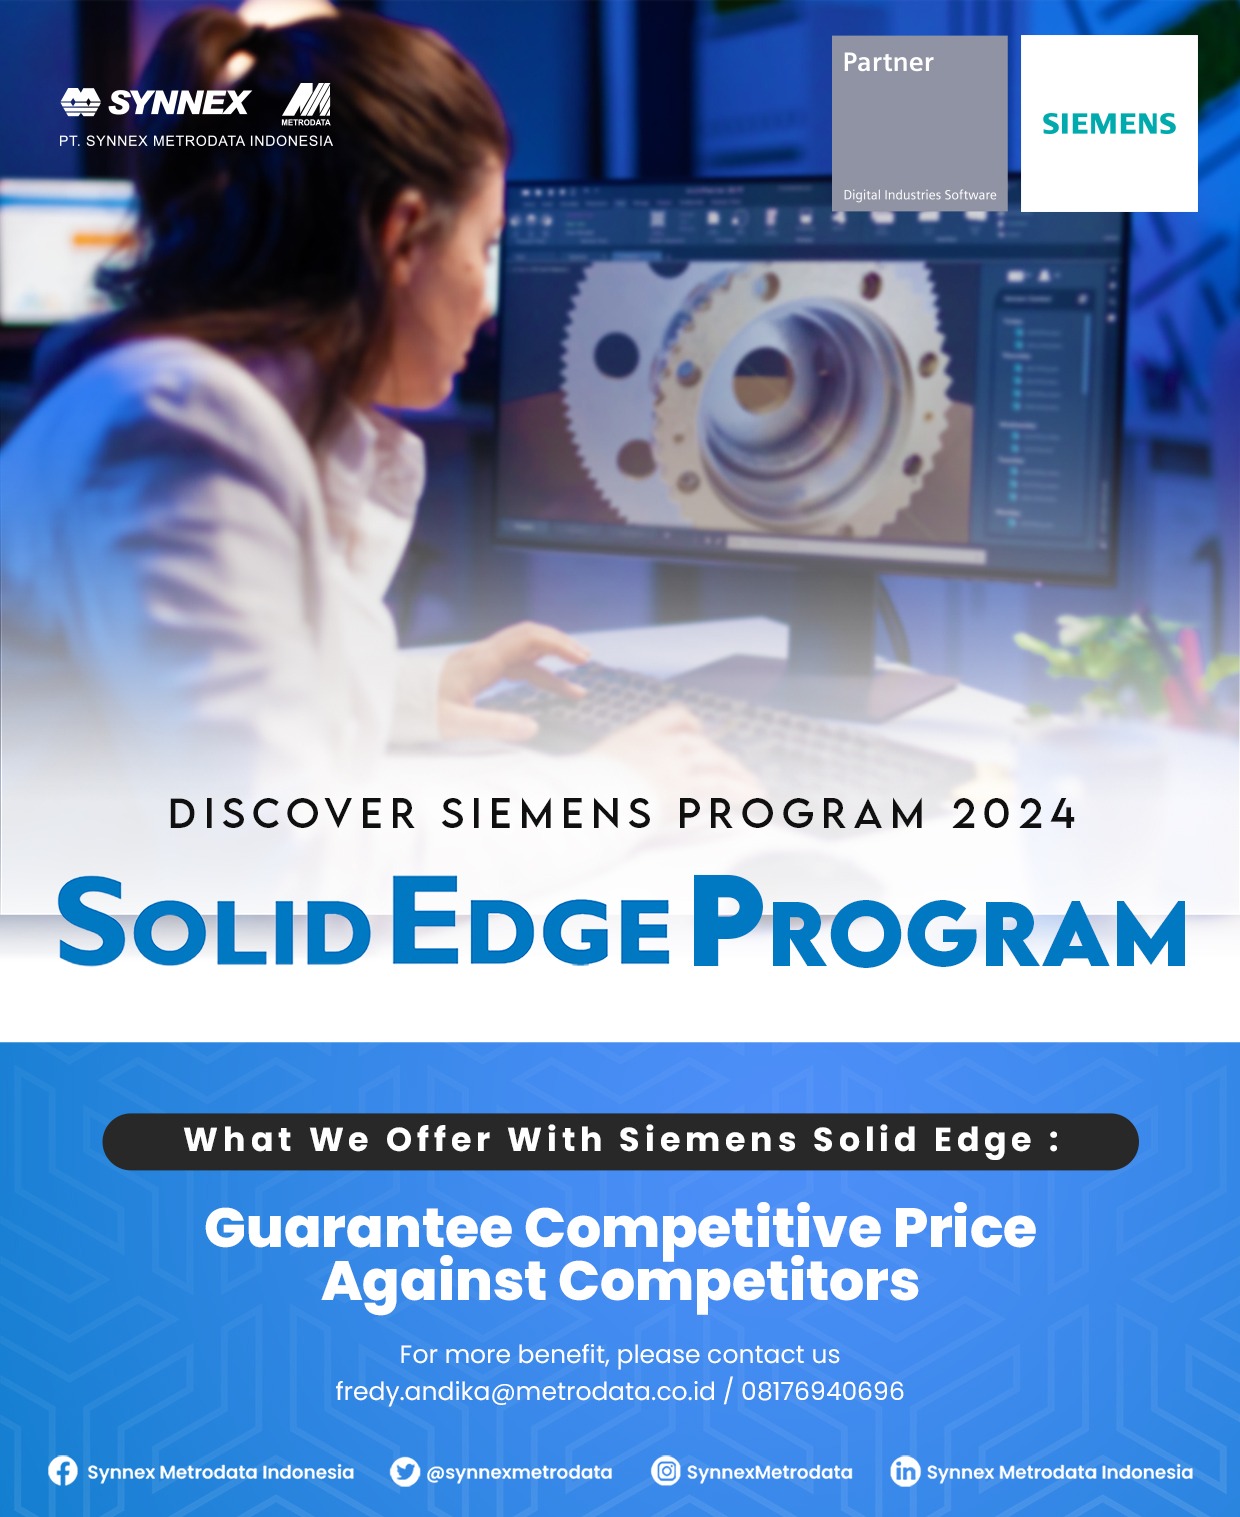 Siemens Solid Edge Program